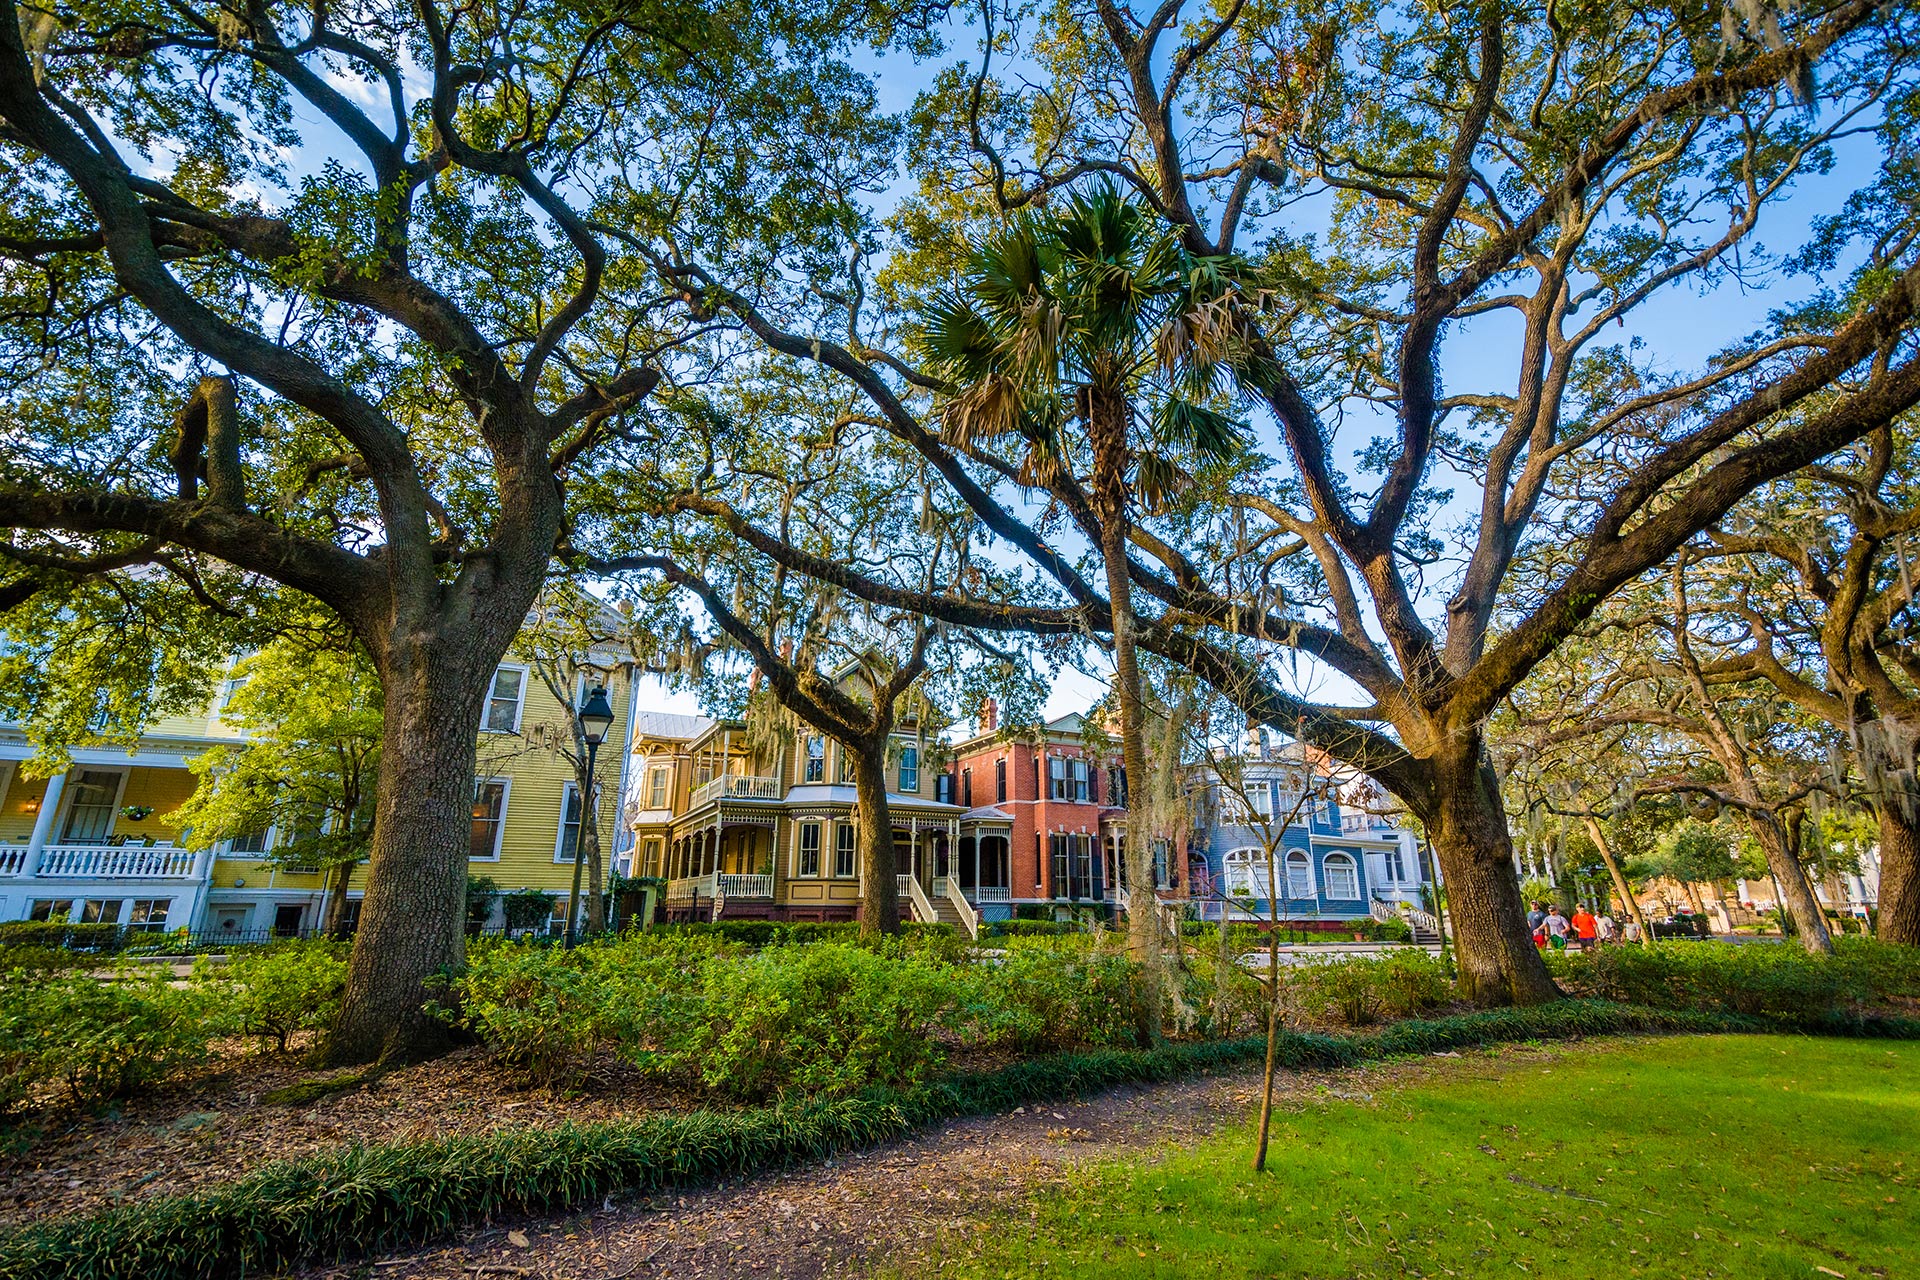 Savannah, Georgia; Photo Courtesy of Jon Bilous/Shutterstock.com